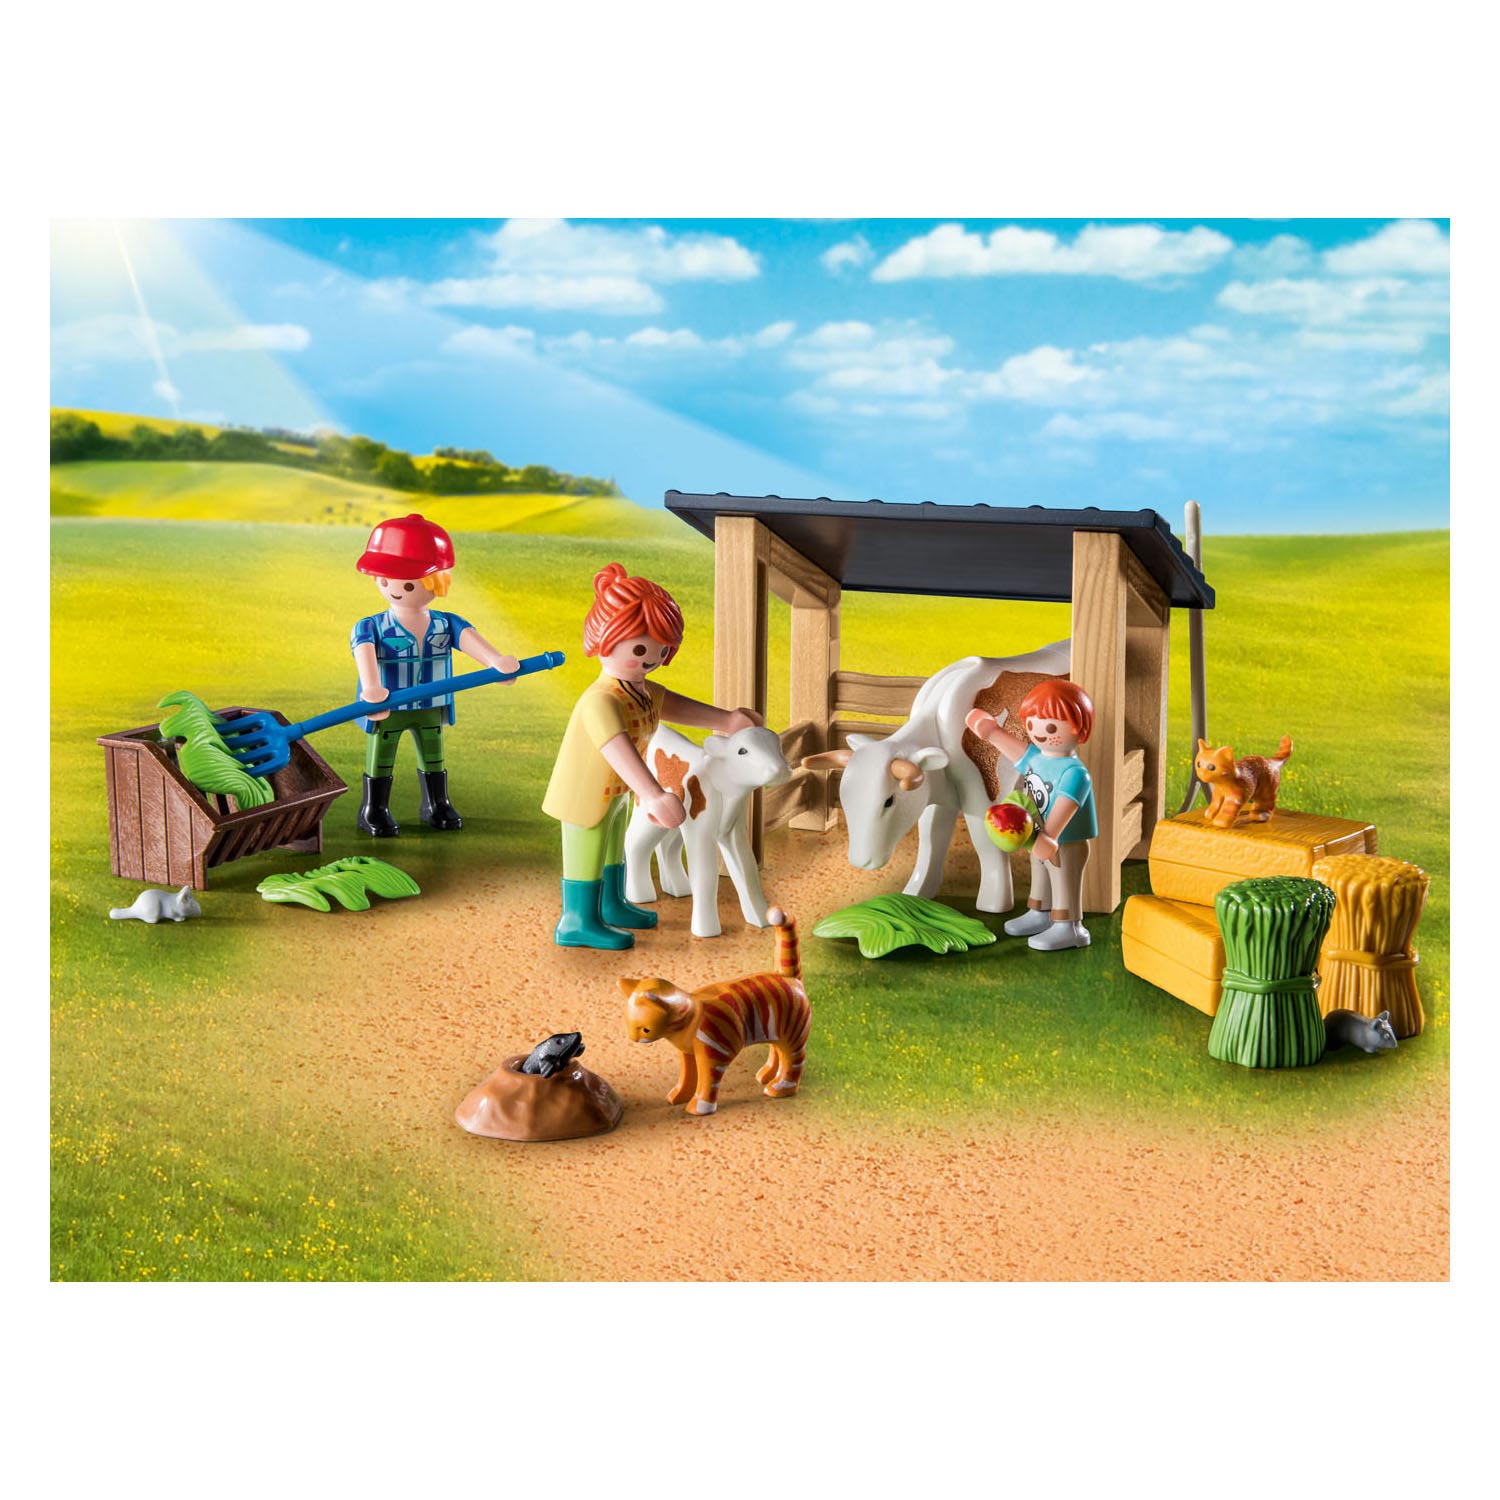 Playmobil Country Farm - 71248